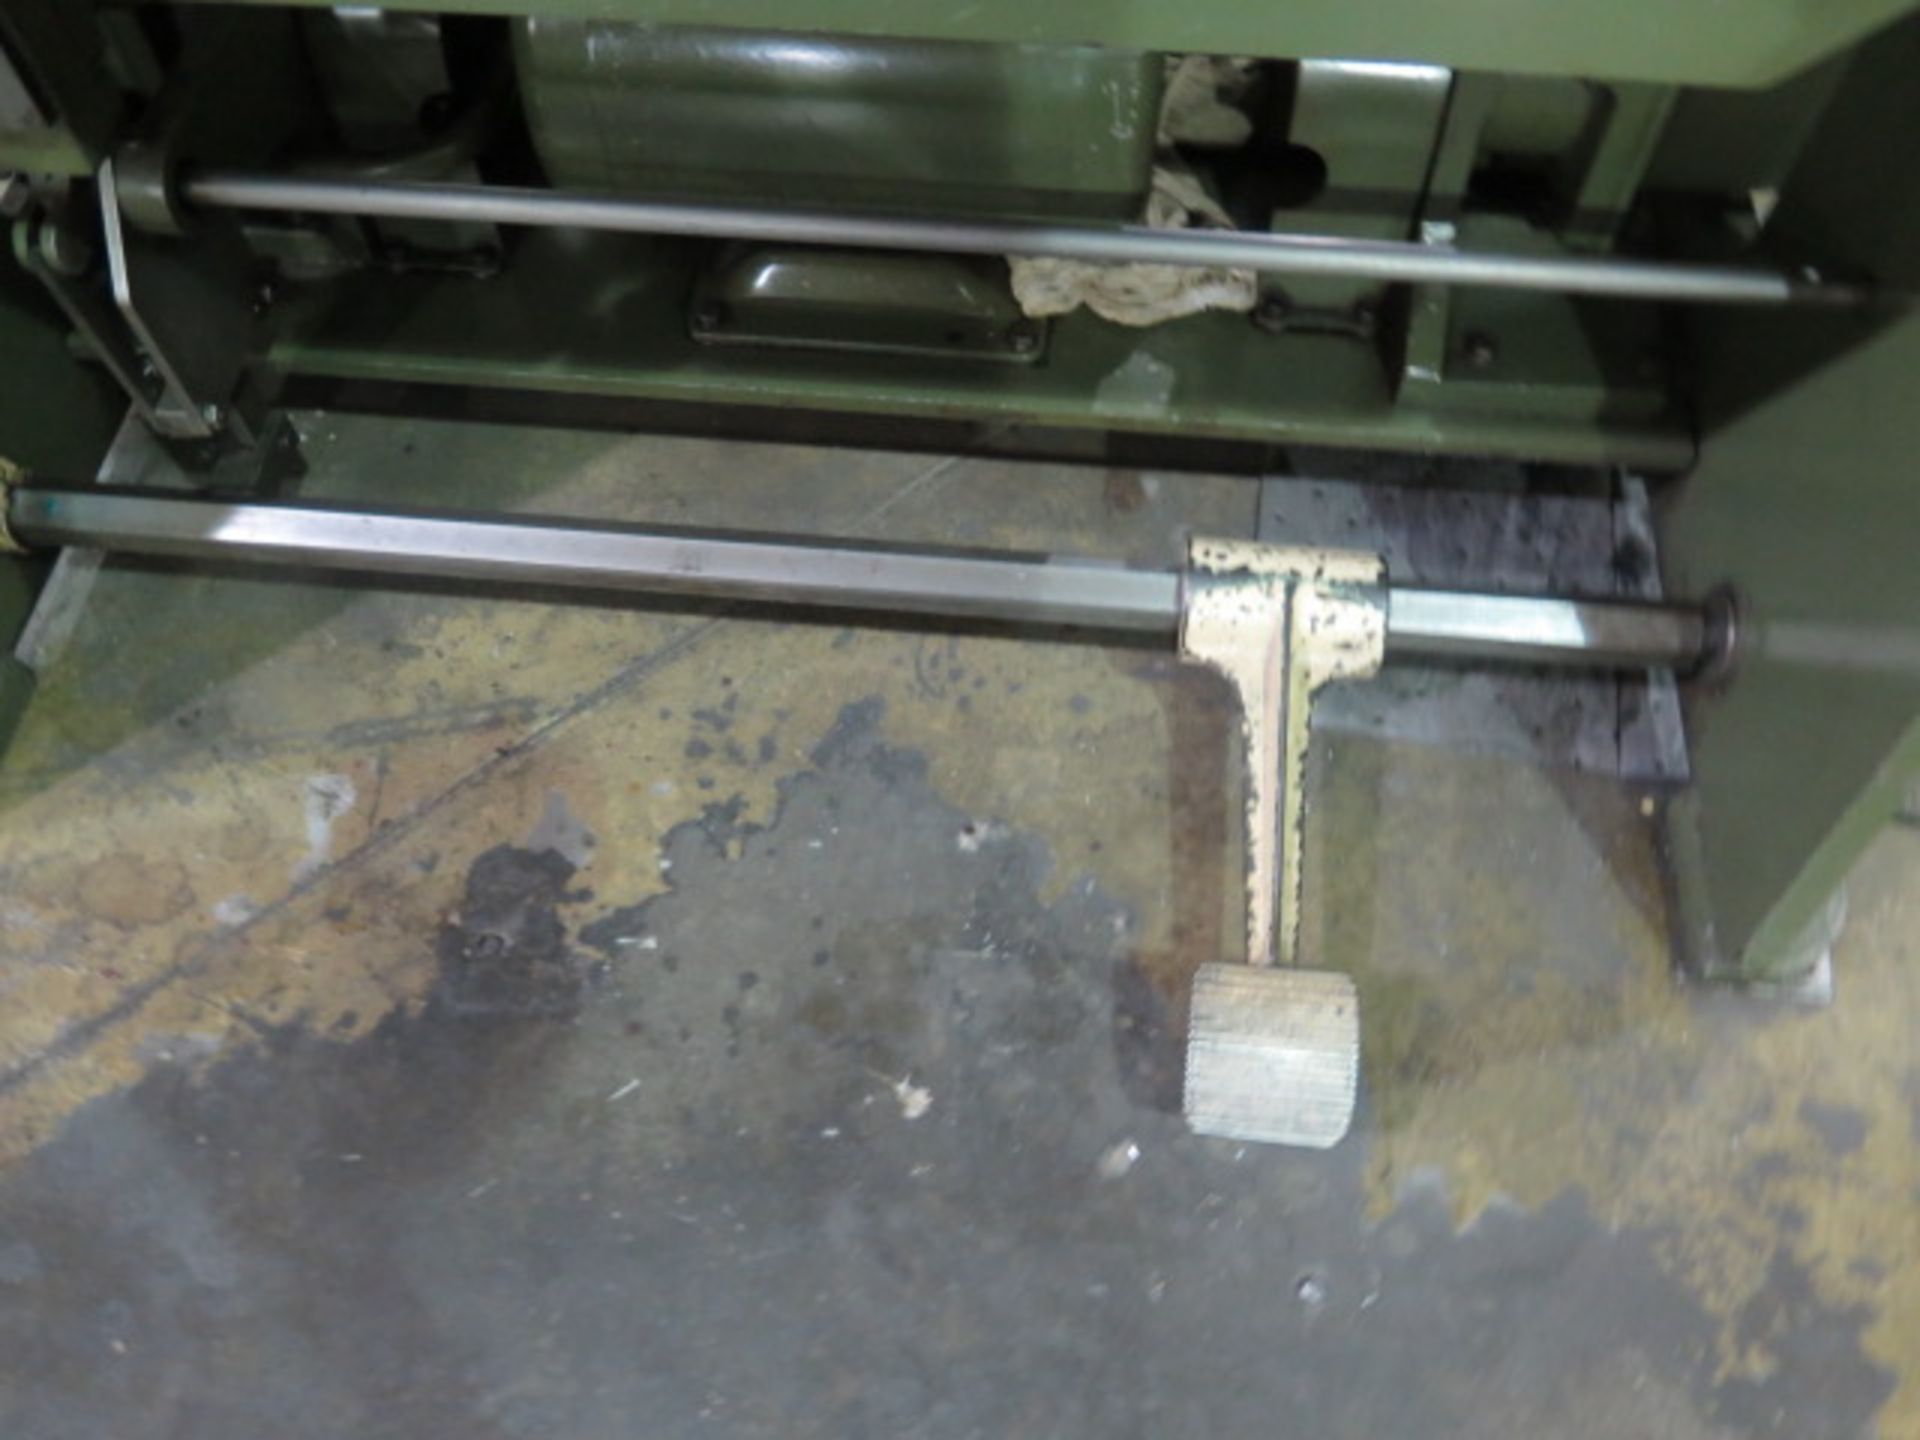 DiAcro 14-48-2 14GA x 4’ Hydrapower Press Brake w/ Manual Back Gauge, 4’ Bed Length, SOLD AS IS - Image 8 of 14